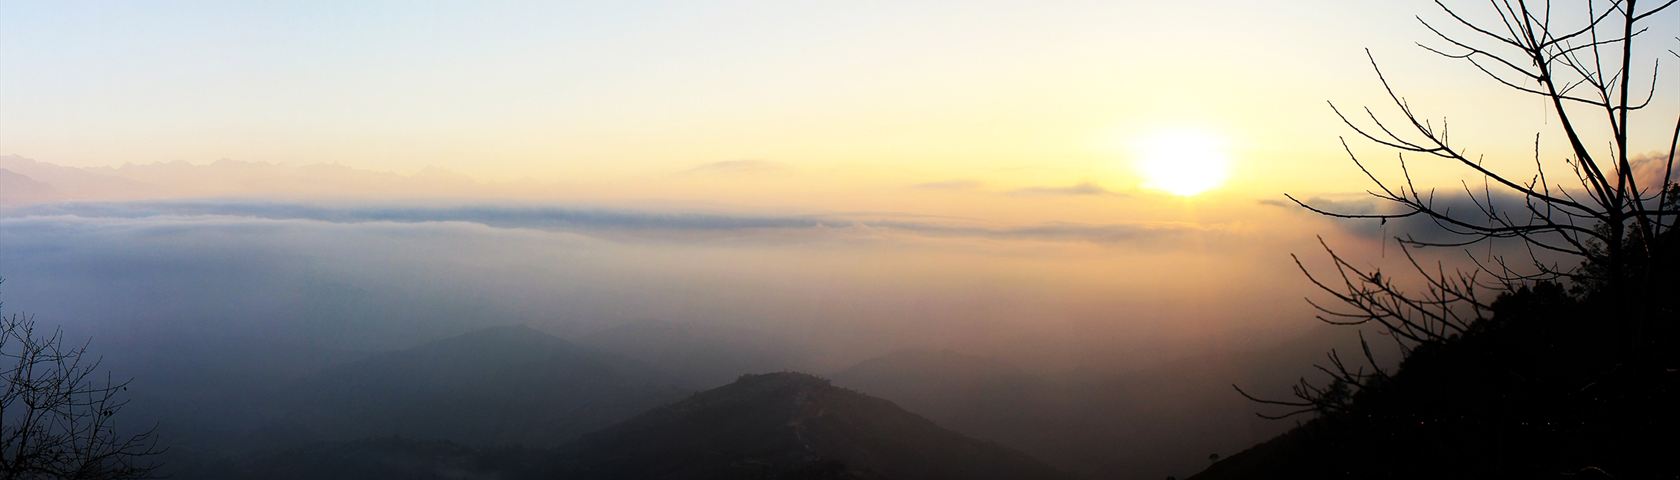 Sunrise in Nagarkot, Nepal